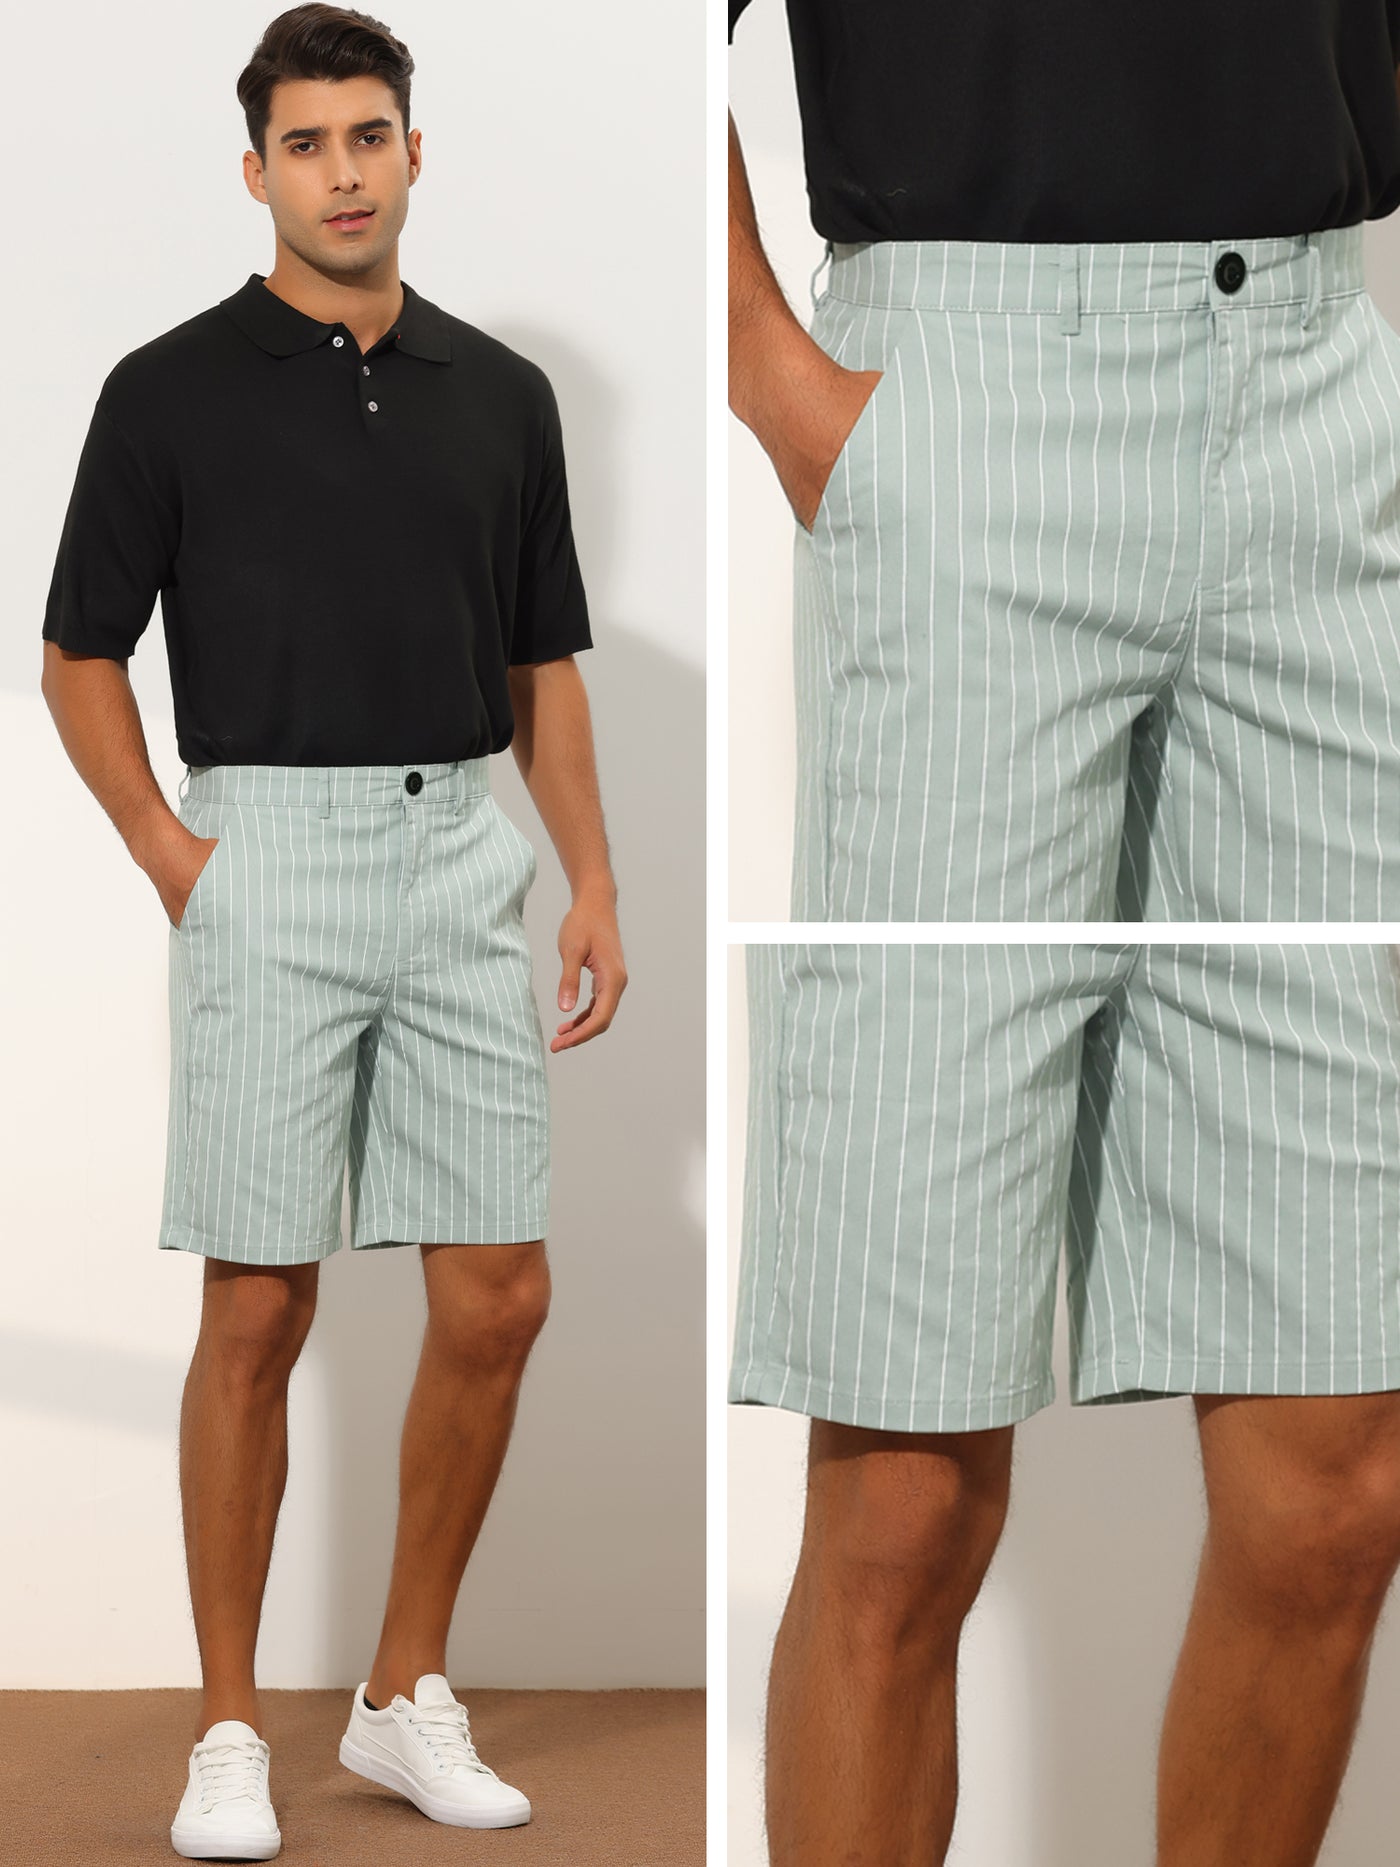 Bublédon Striped Dress Shorts for Men's Regular Fit Lightweight Business Chino Short Pants